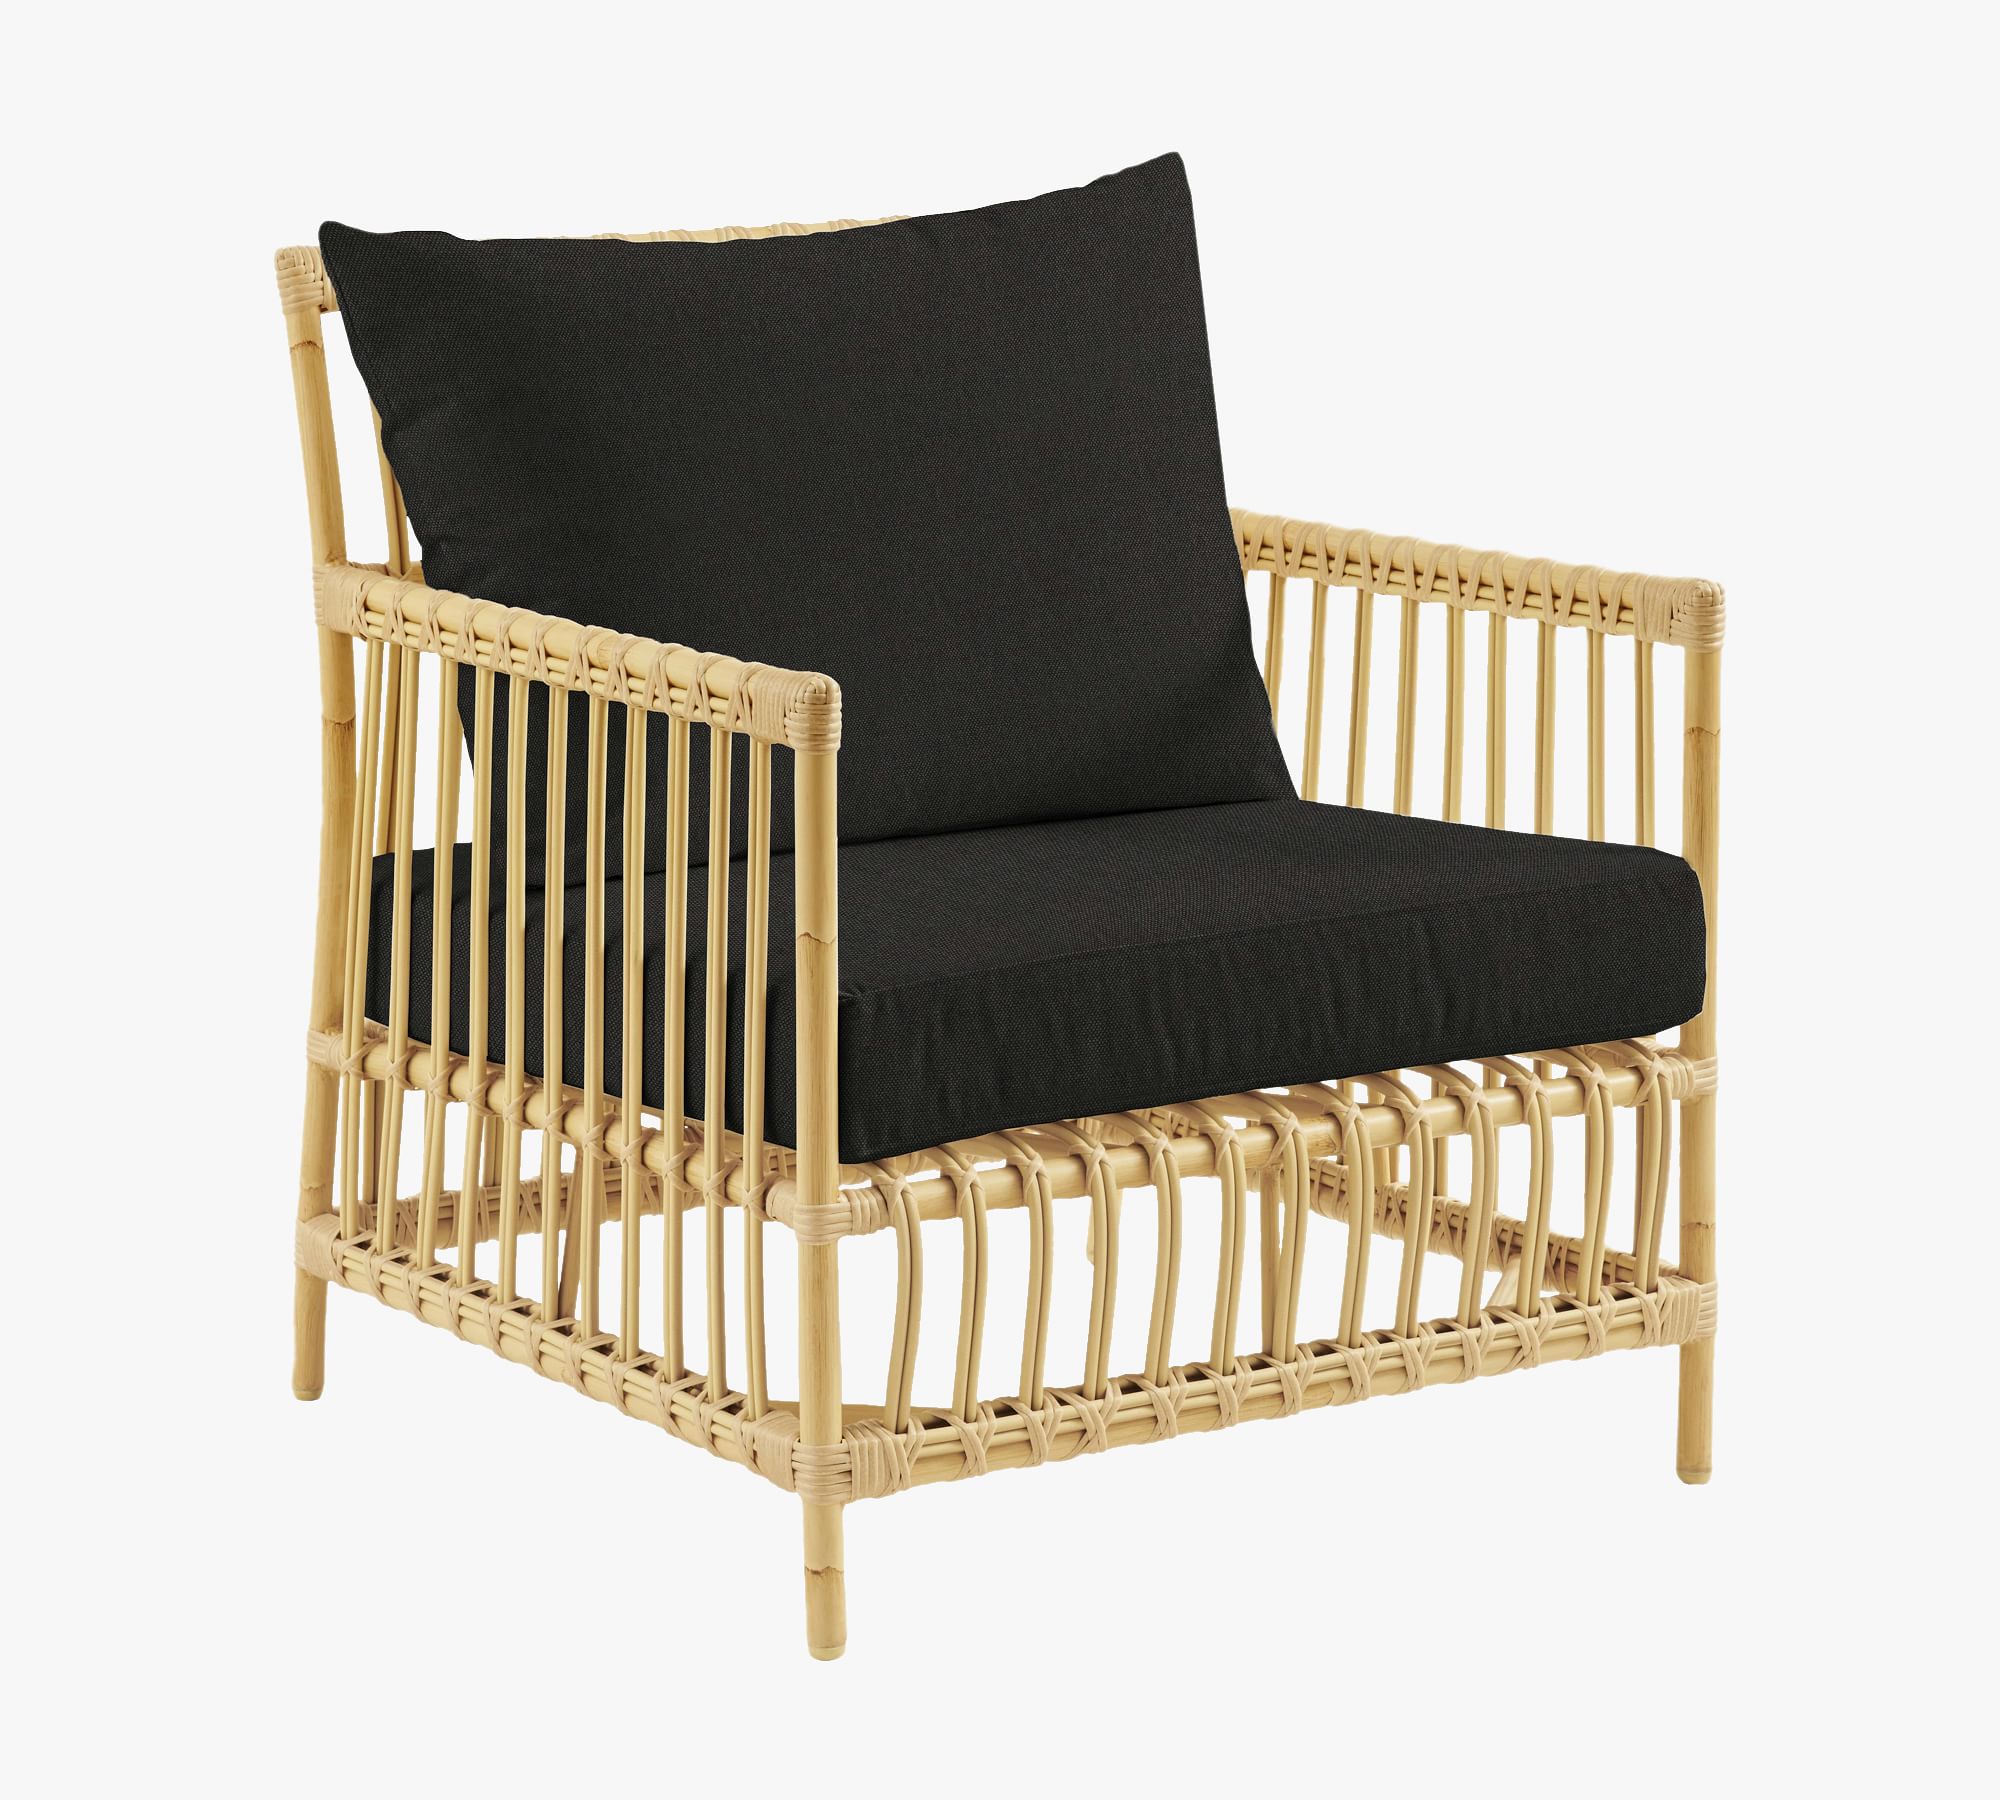 Caroline Alu-Rattan Lounge Chair with Cushion